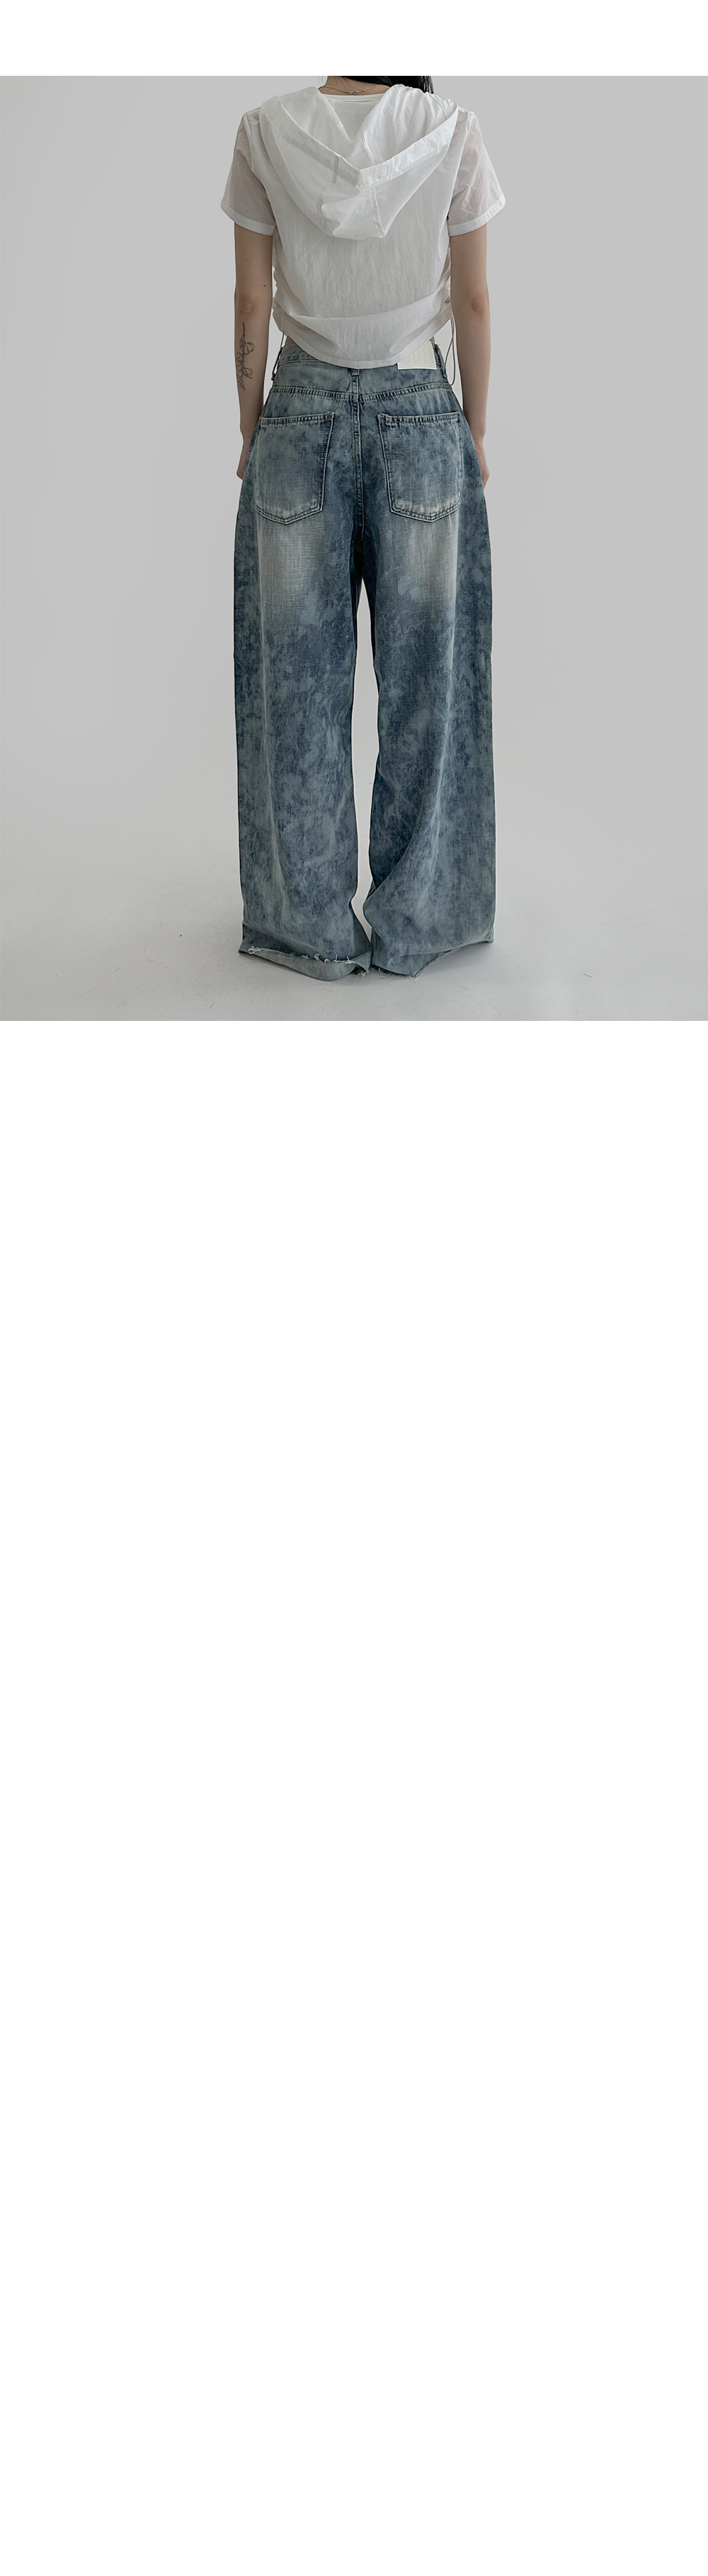 suspenders skirt/pants grey color image-S1L7